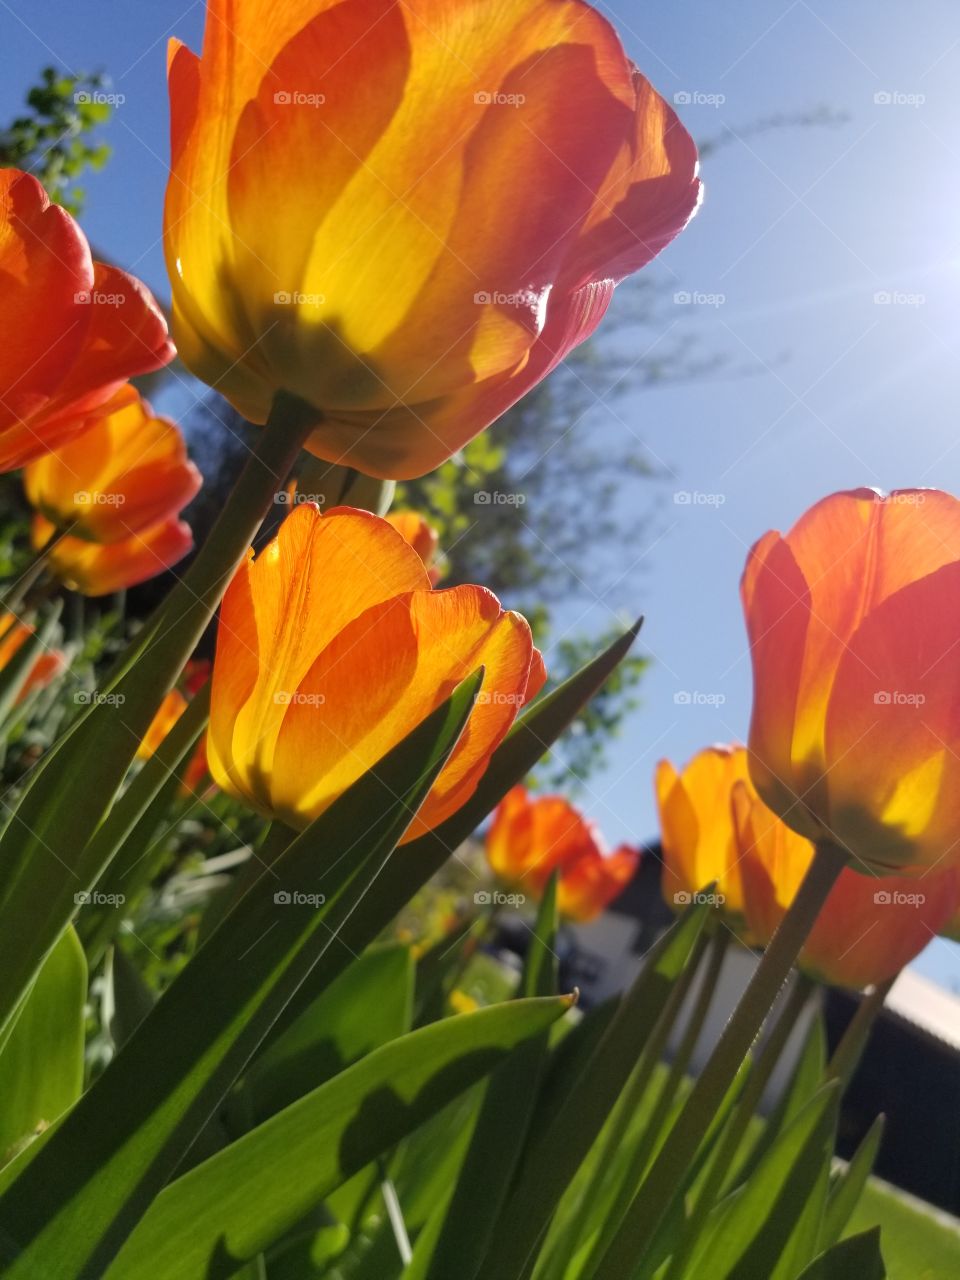 Some tulips enjoying the sun.